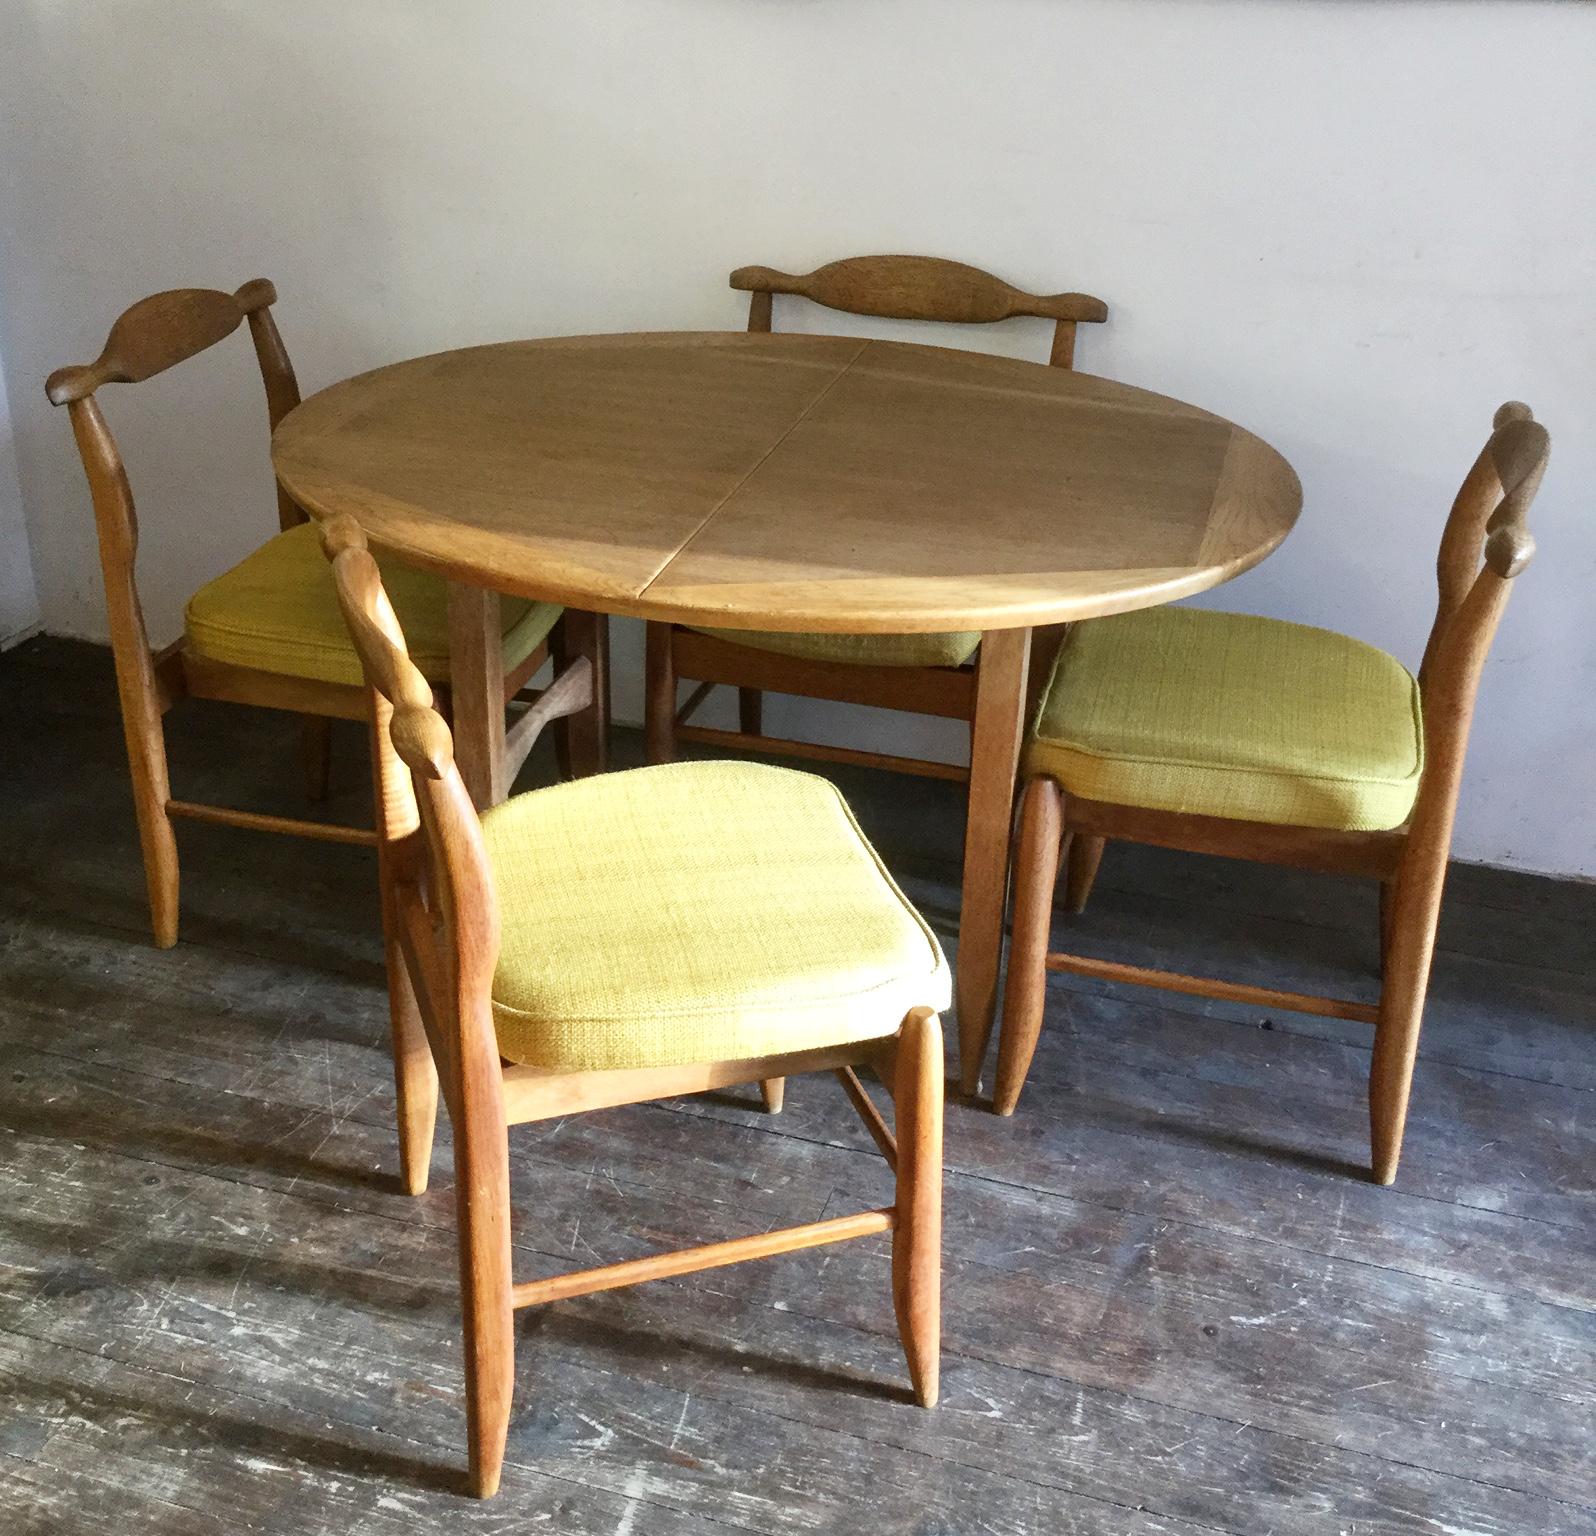 Guillerme et Chambron, extendable oak dining table set
Including four chairs model 